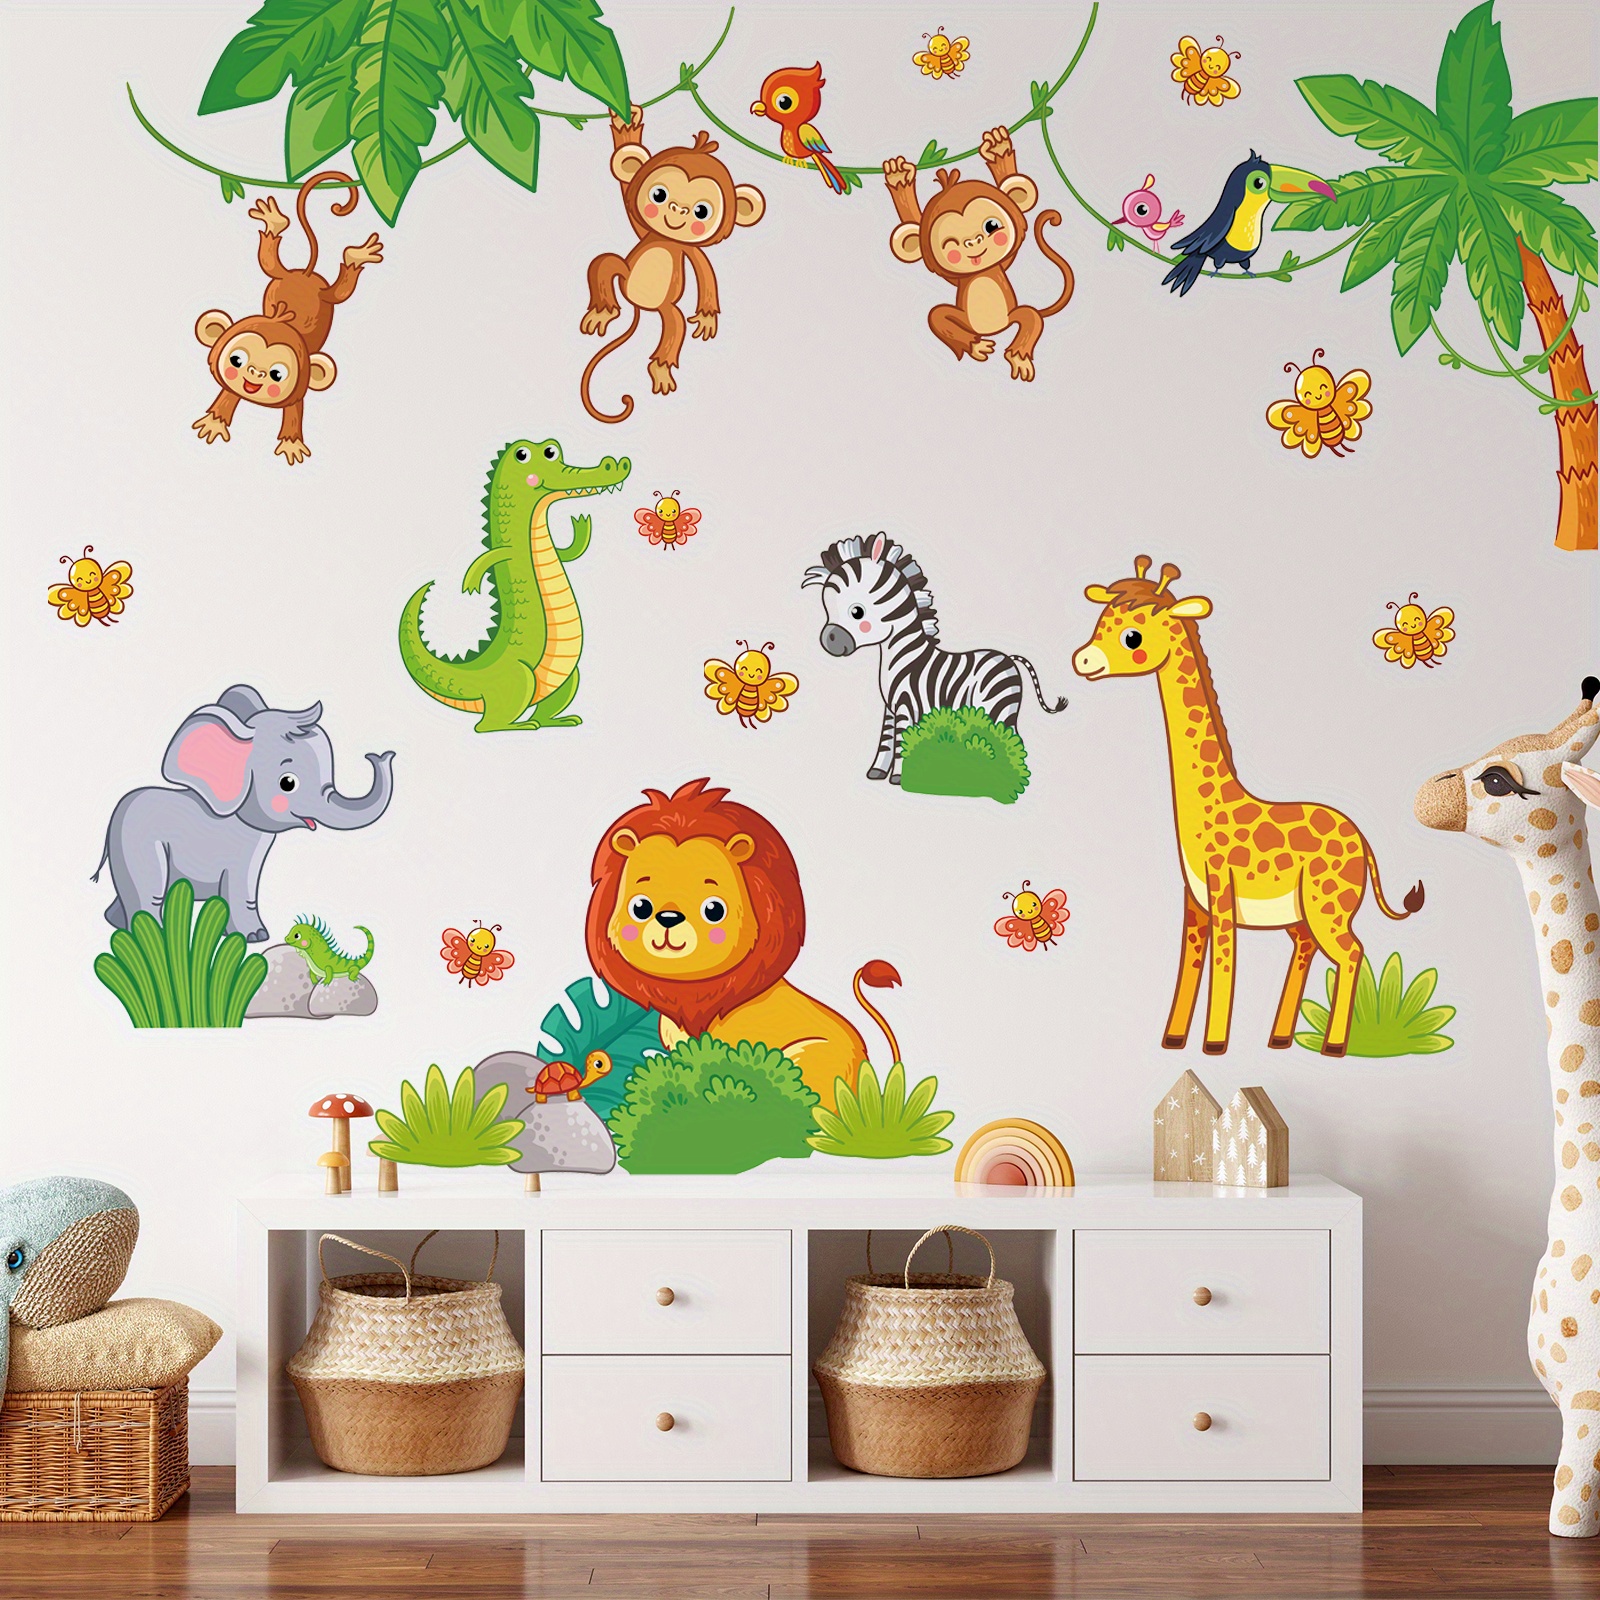 Baby Room Jungle Wall Stickers  Safari Animal Wall Stickers